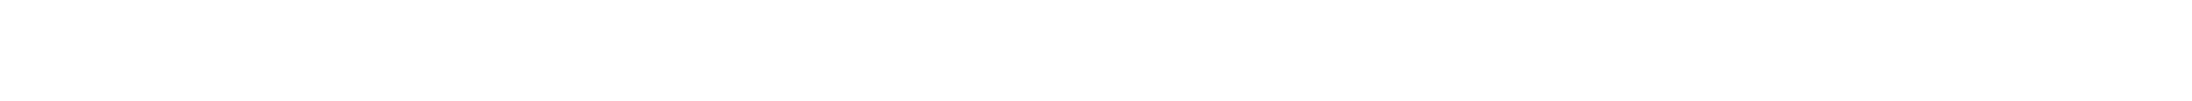 Fellowships & Internships white logo